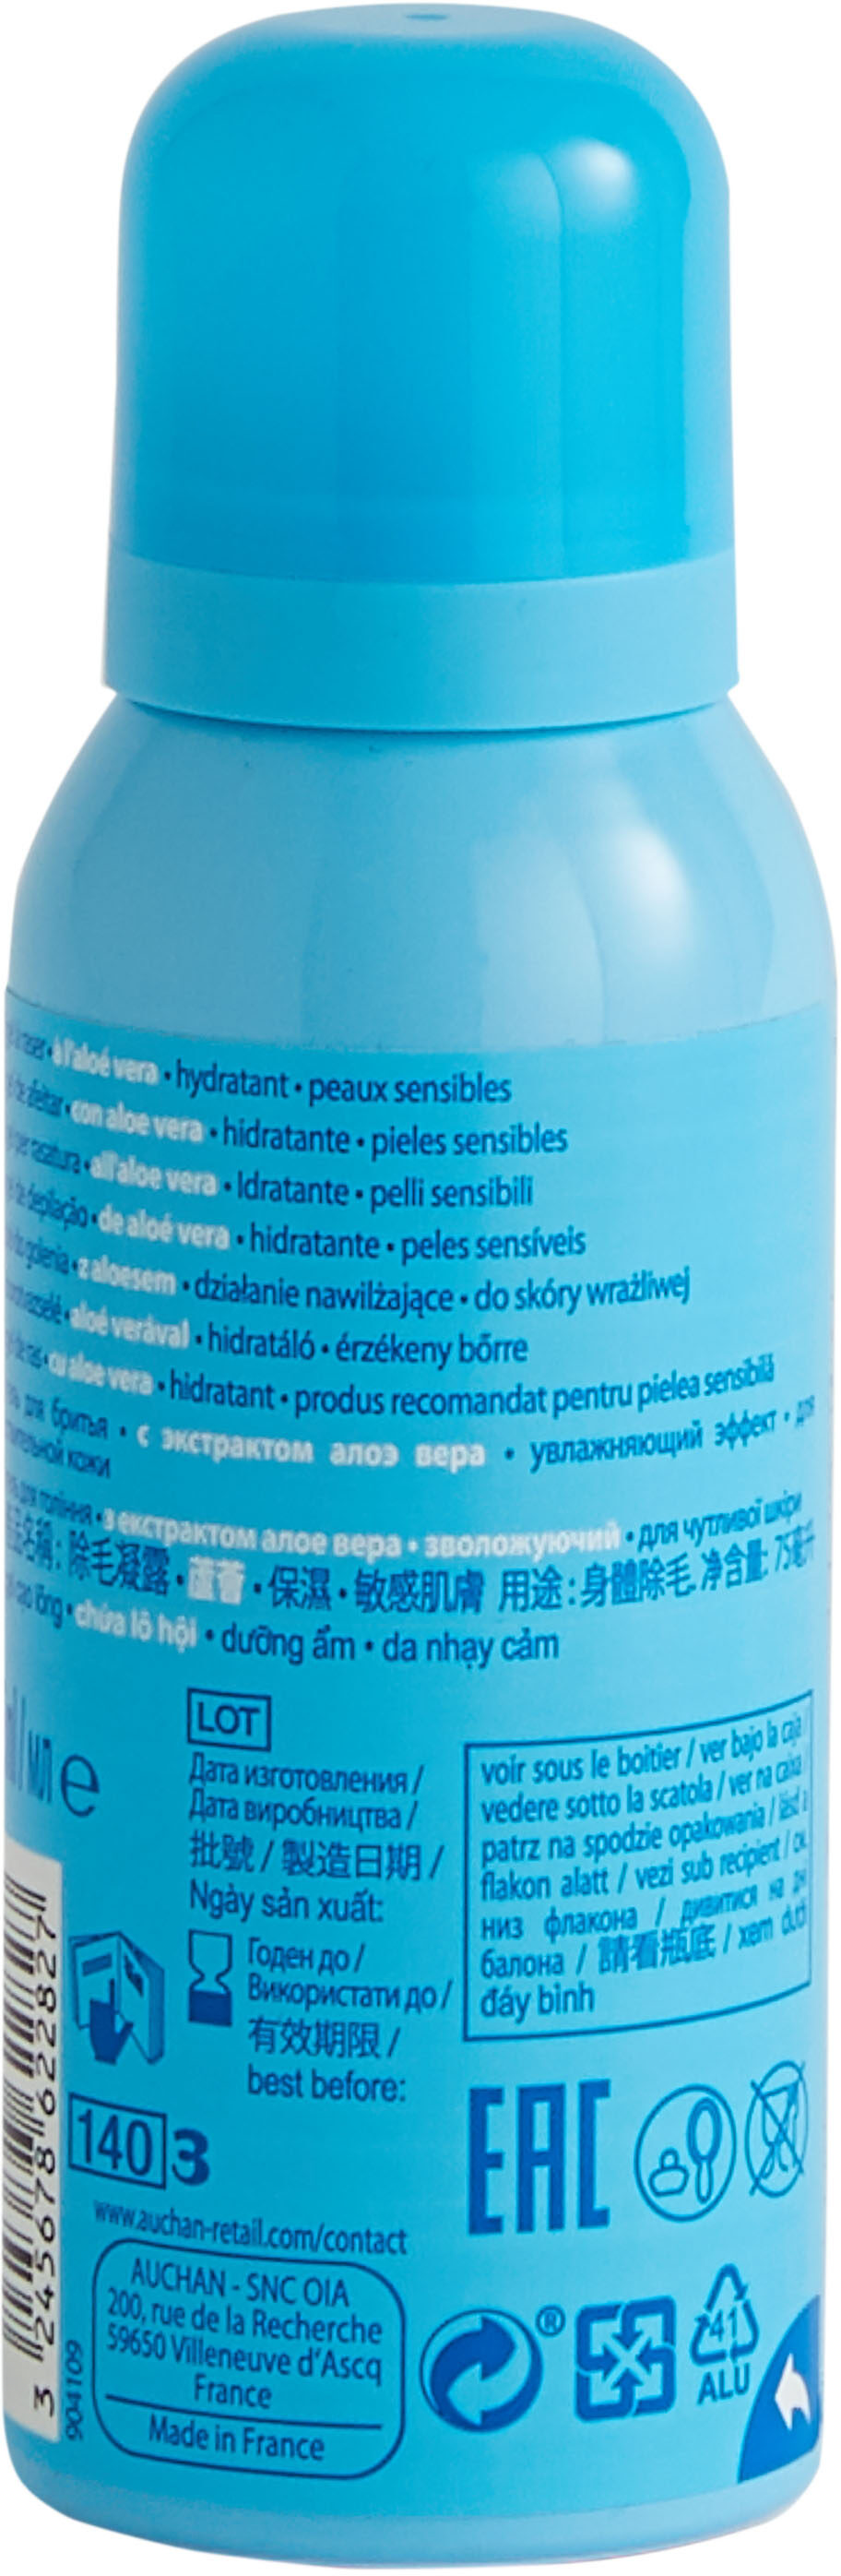 Cosmia - gel à raser - à l'aloe vera - peaux sensibles - 75 ml / volume nomial 140ml ? - Produto - fr